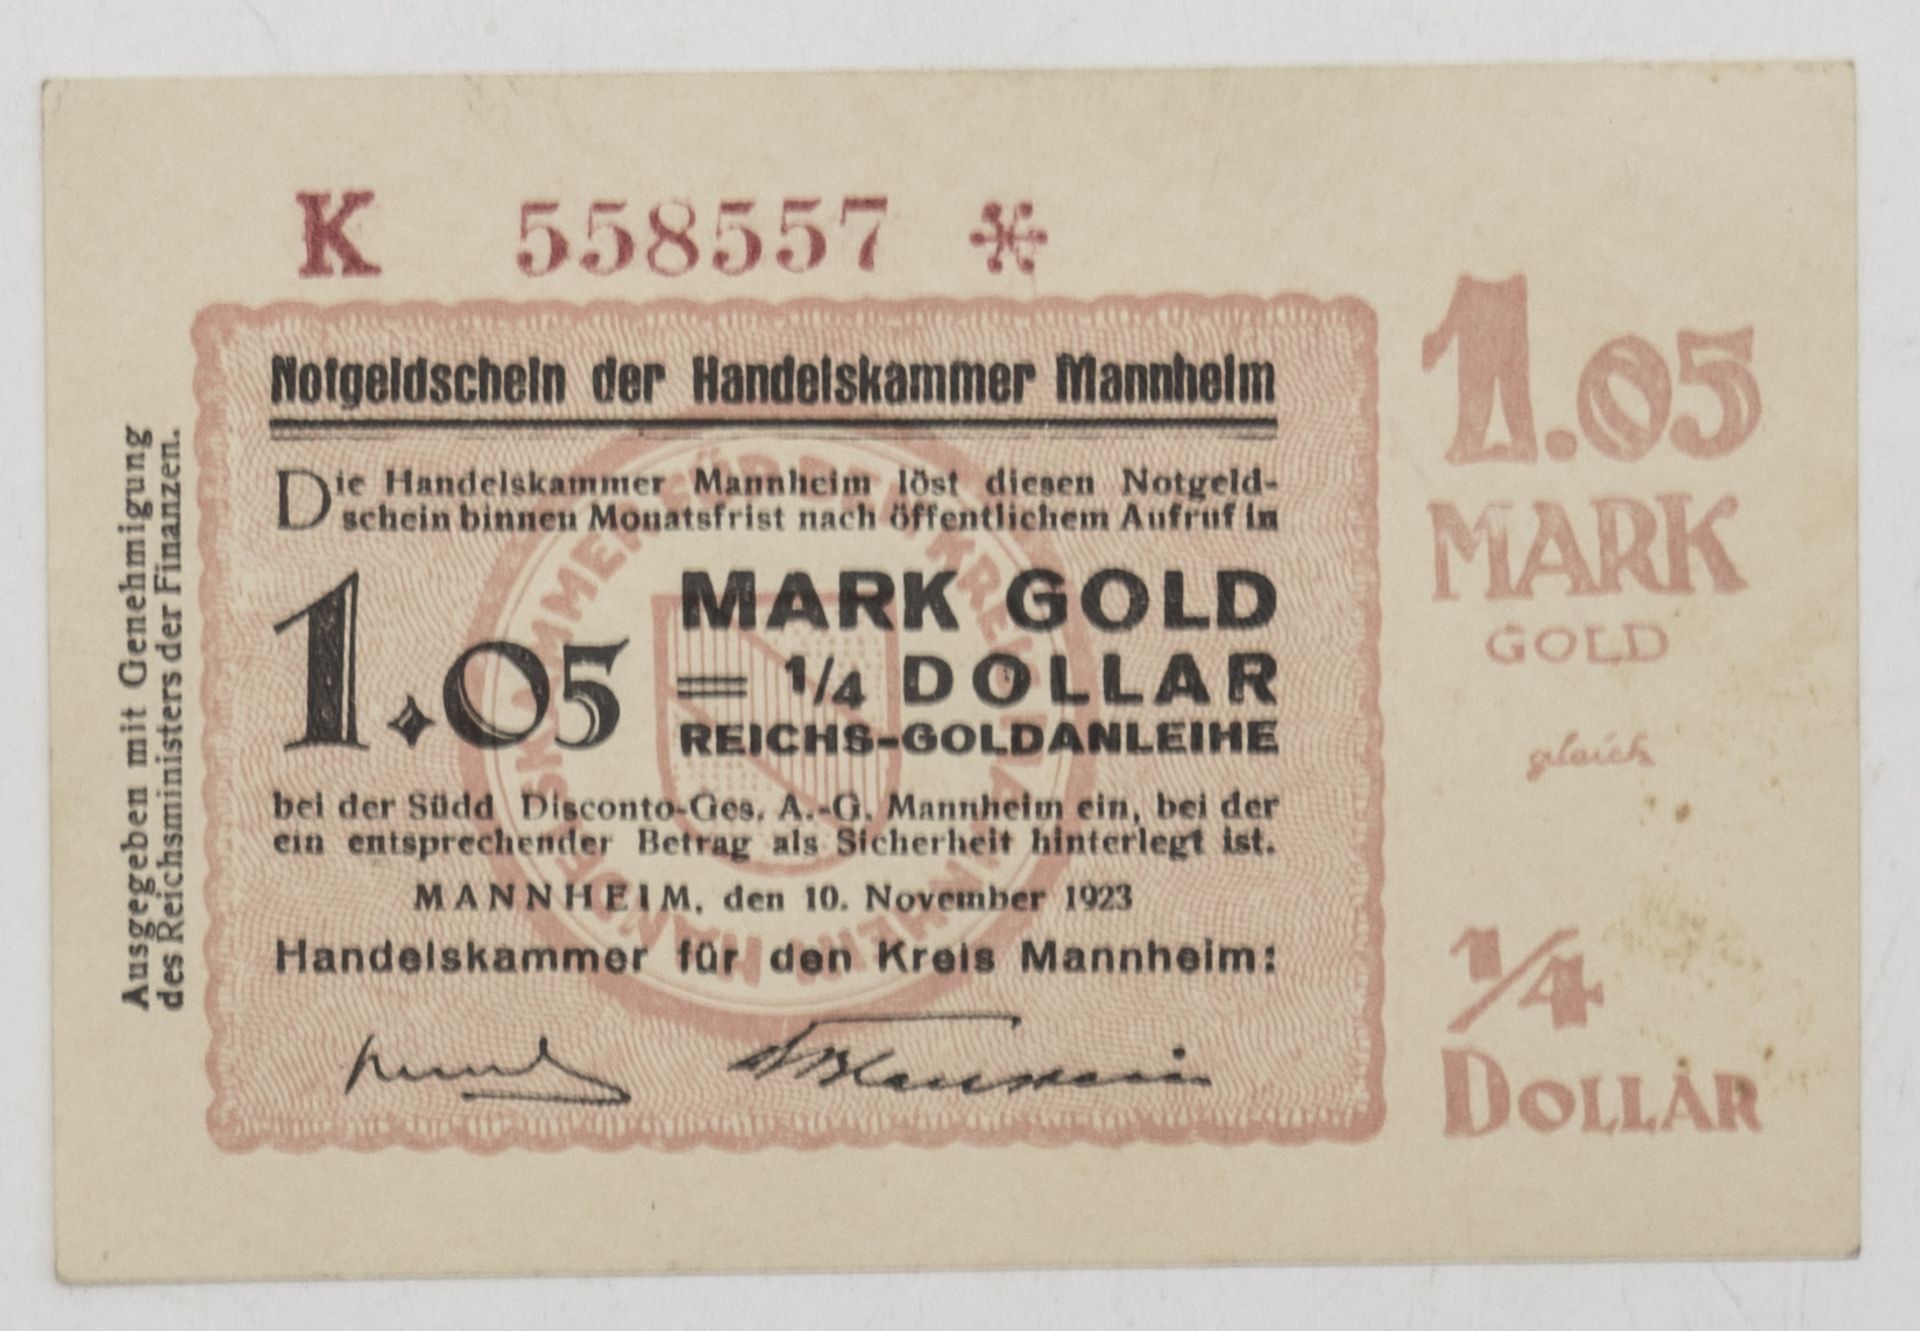 Notgeld der Handelskammer Mannheim, 10. November 1923, 1.05 Mark Gold = 1/4 Dollar. Erhaltung: